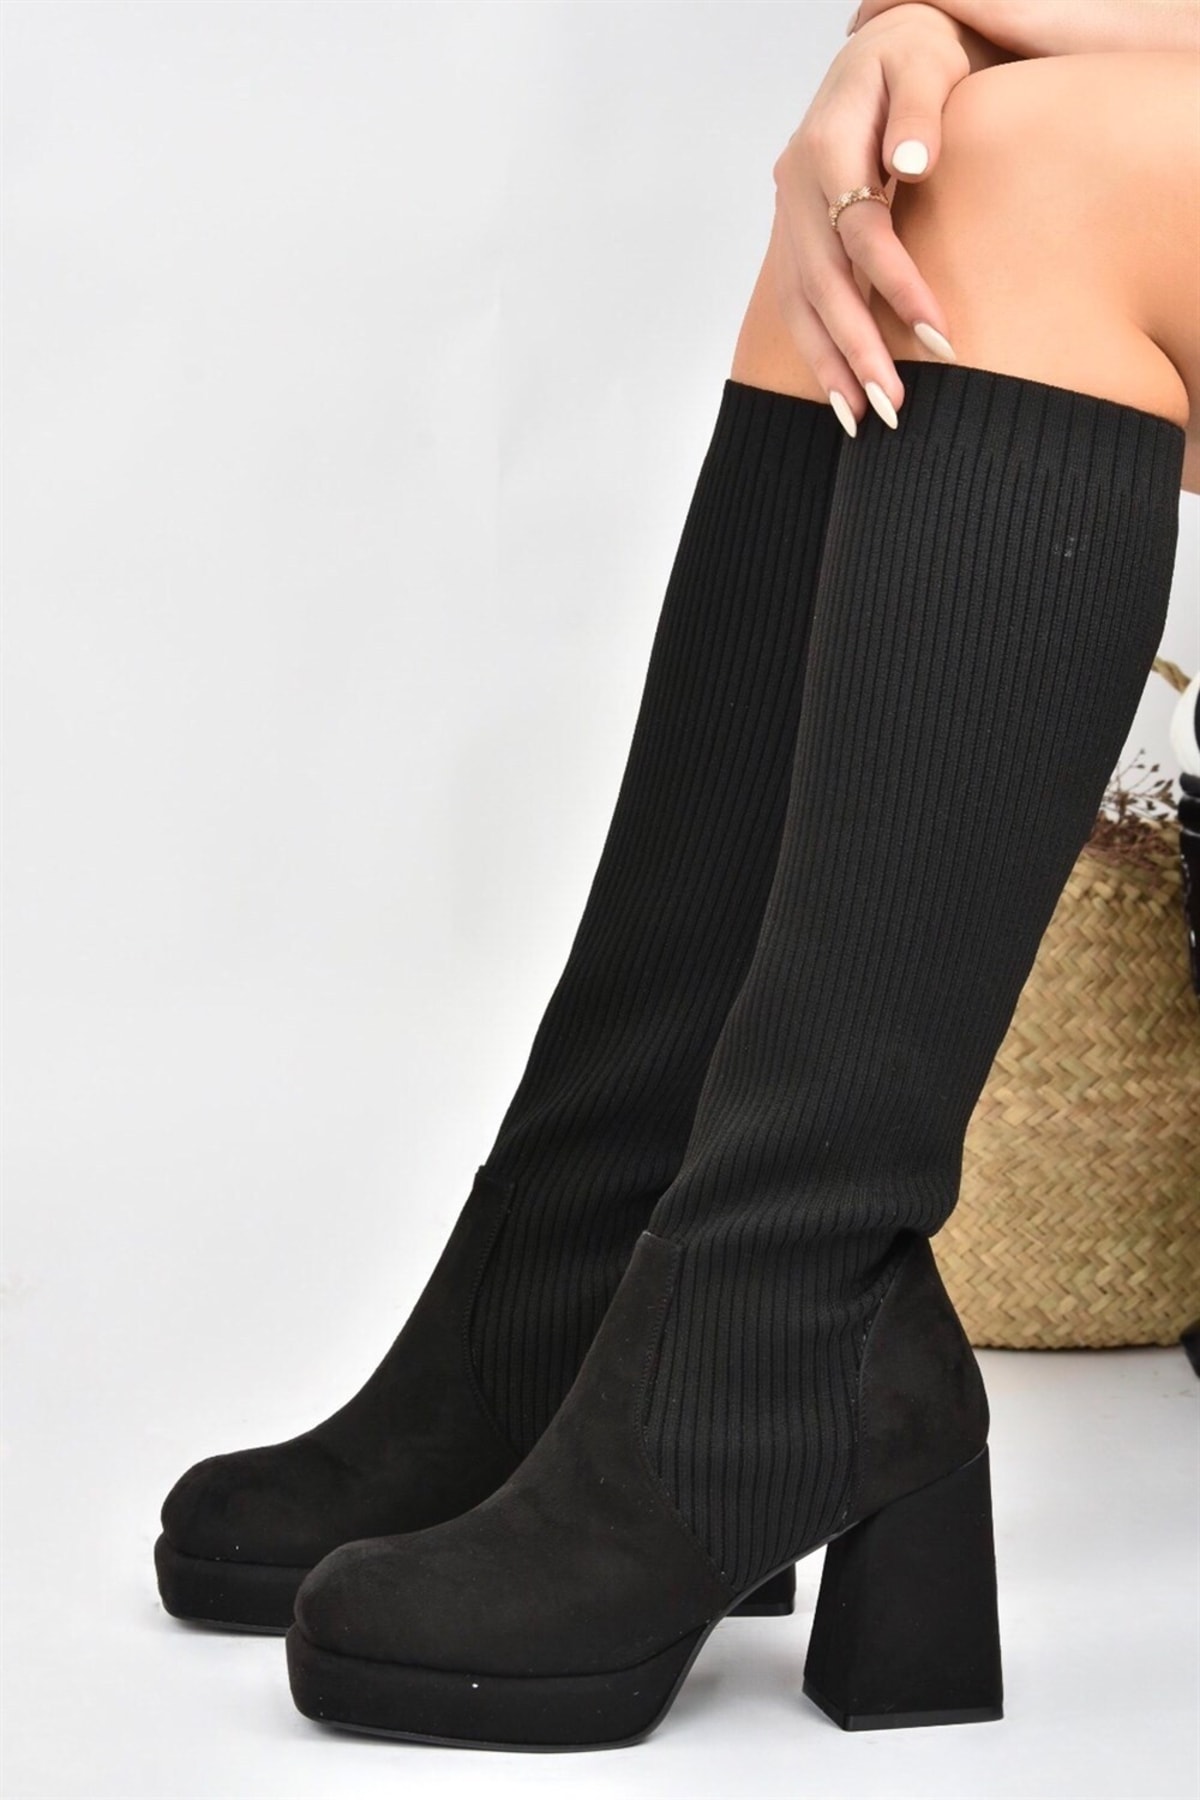 Fox Shoes Women's Black Suede Platform Heeled Knitwear Boots